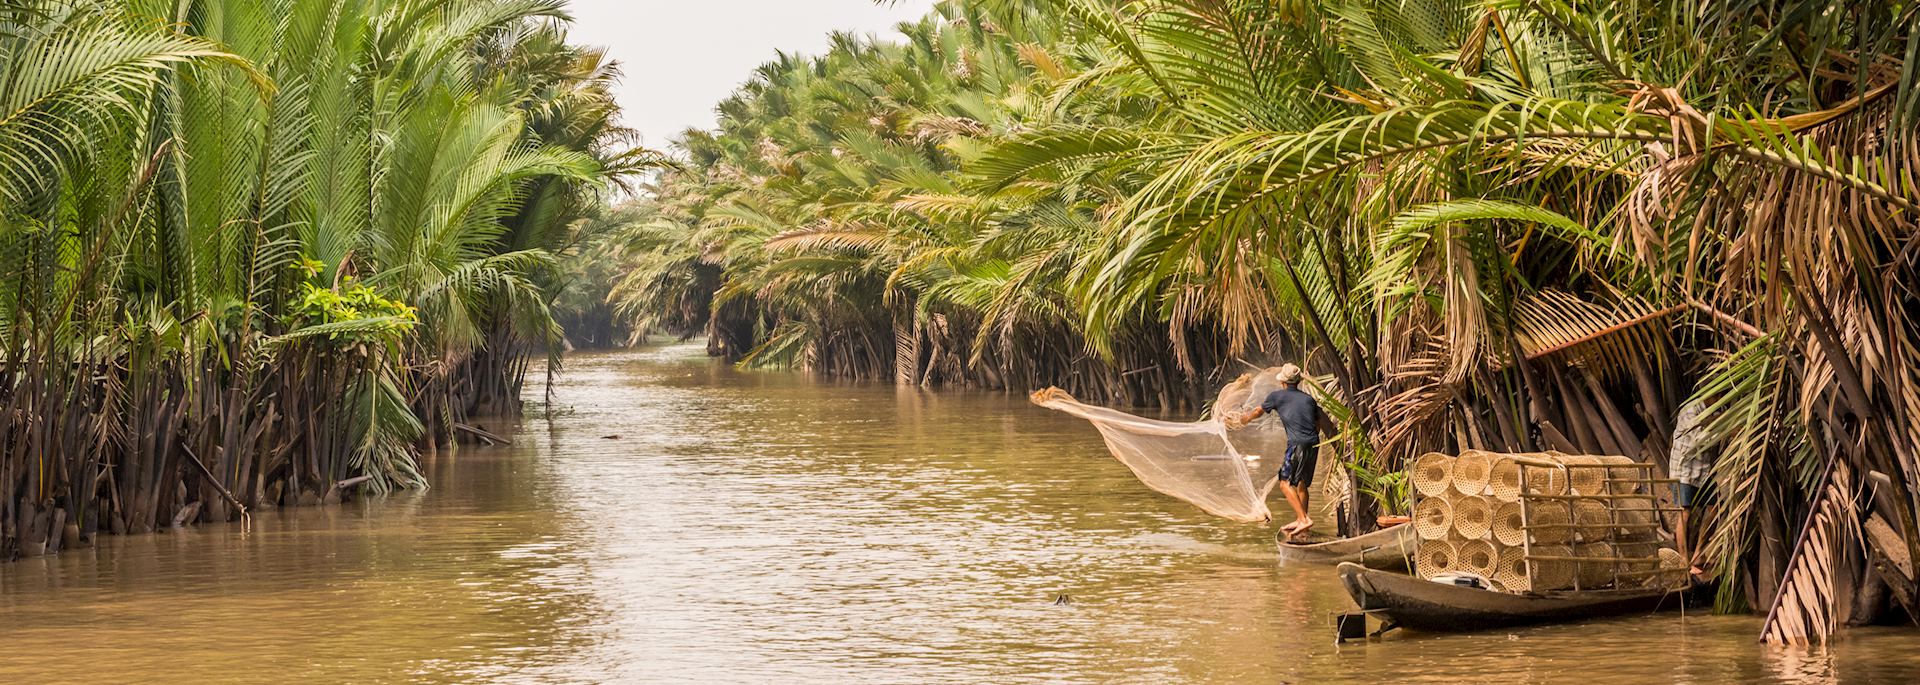 Fishing on the Mekong River, Vietnam